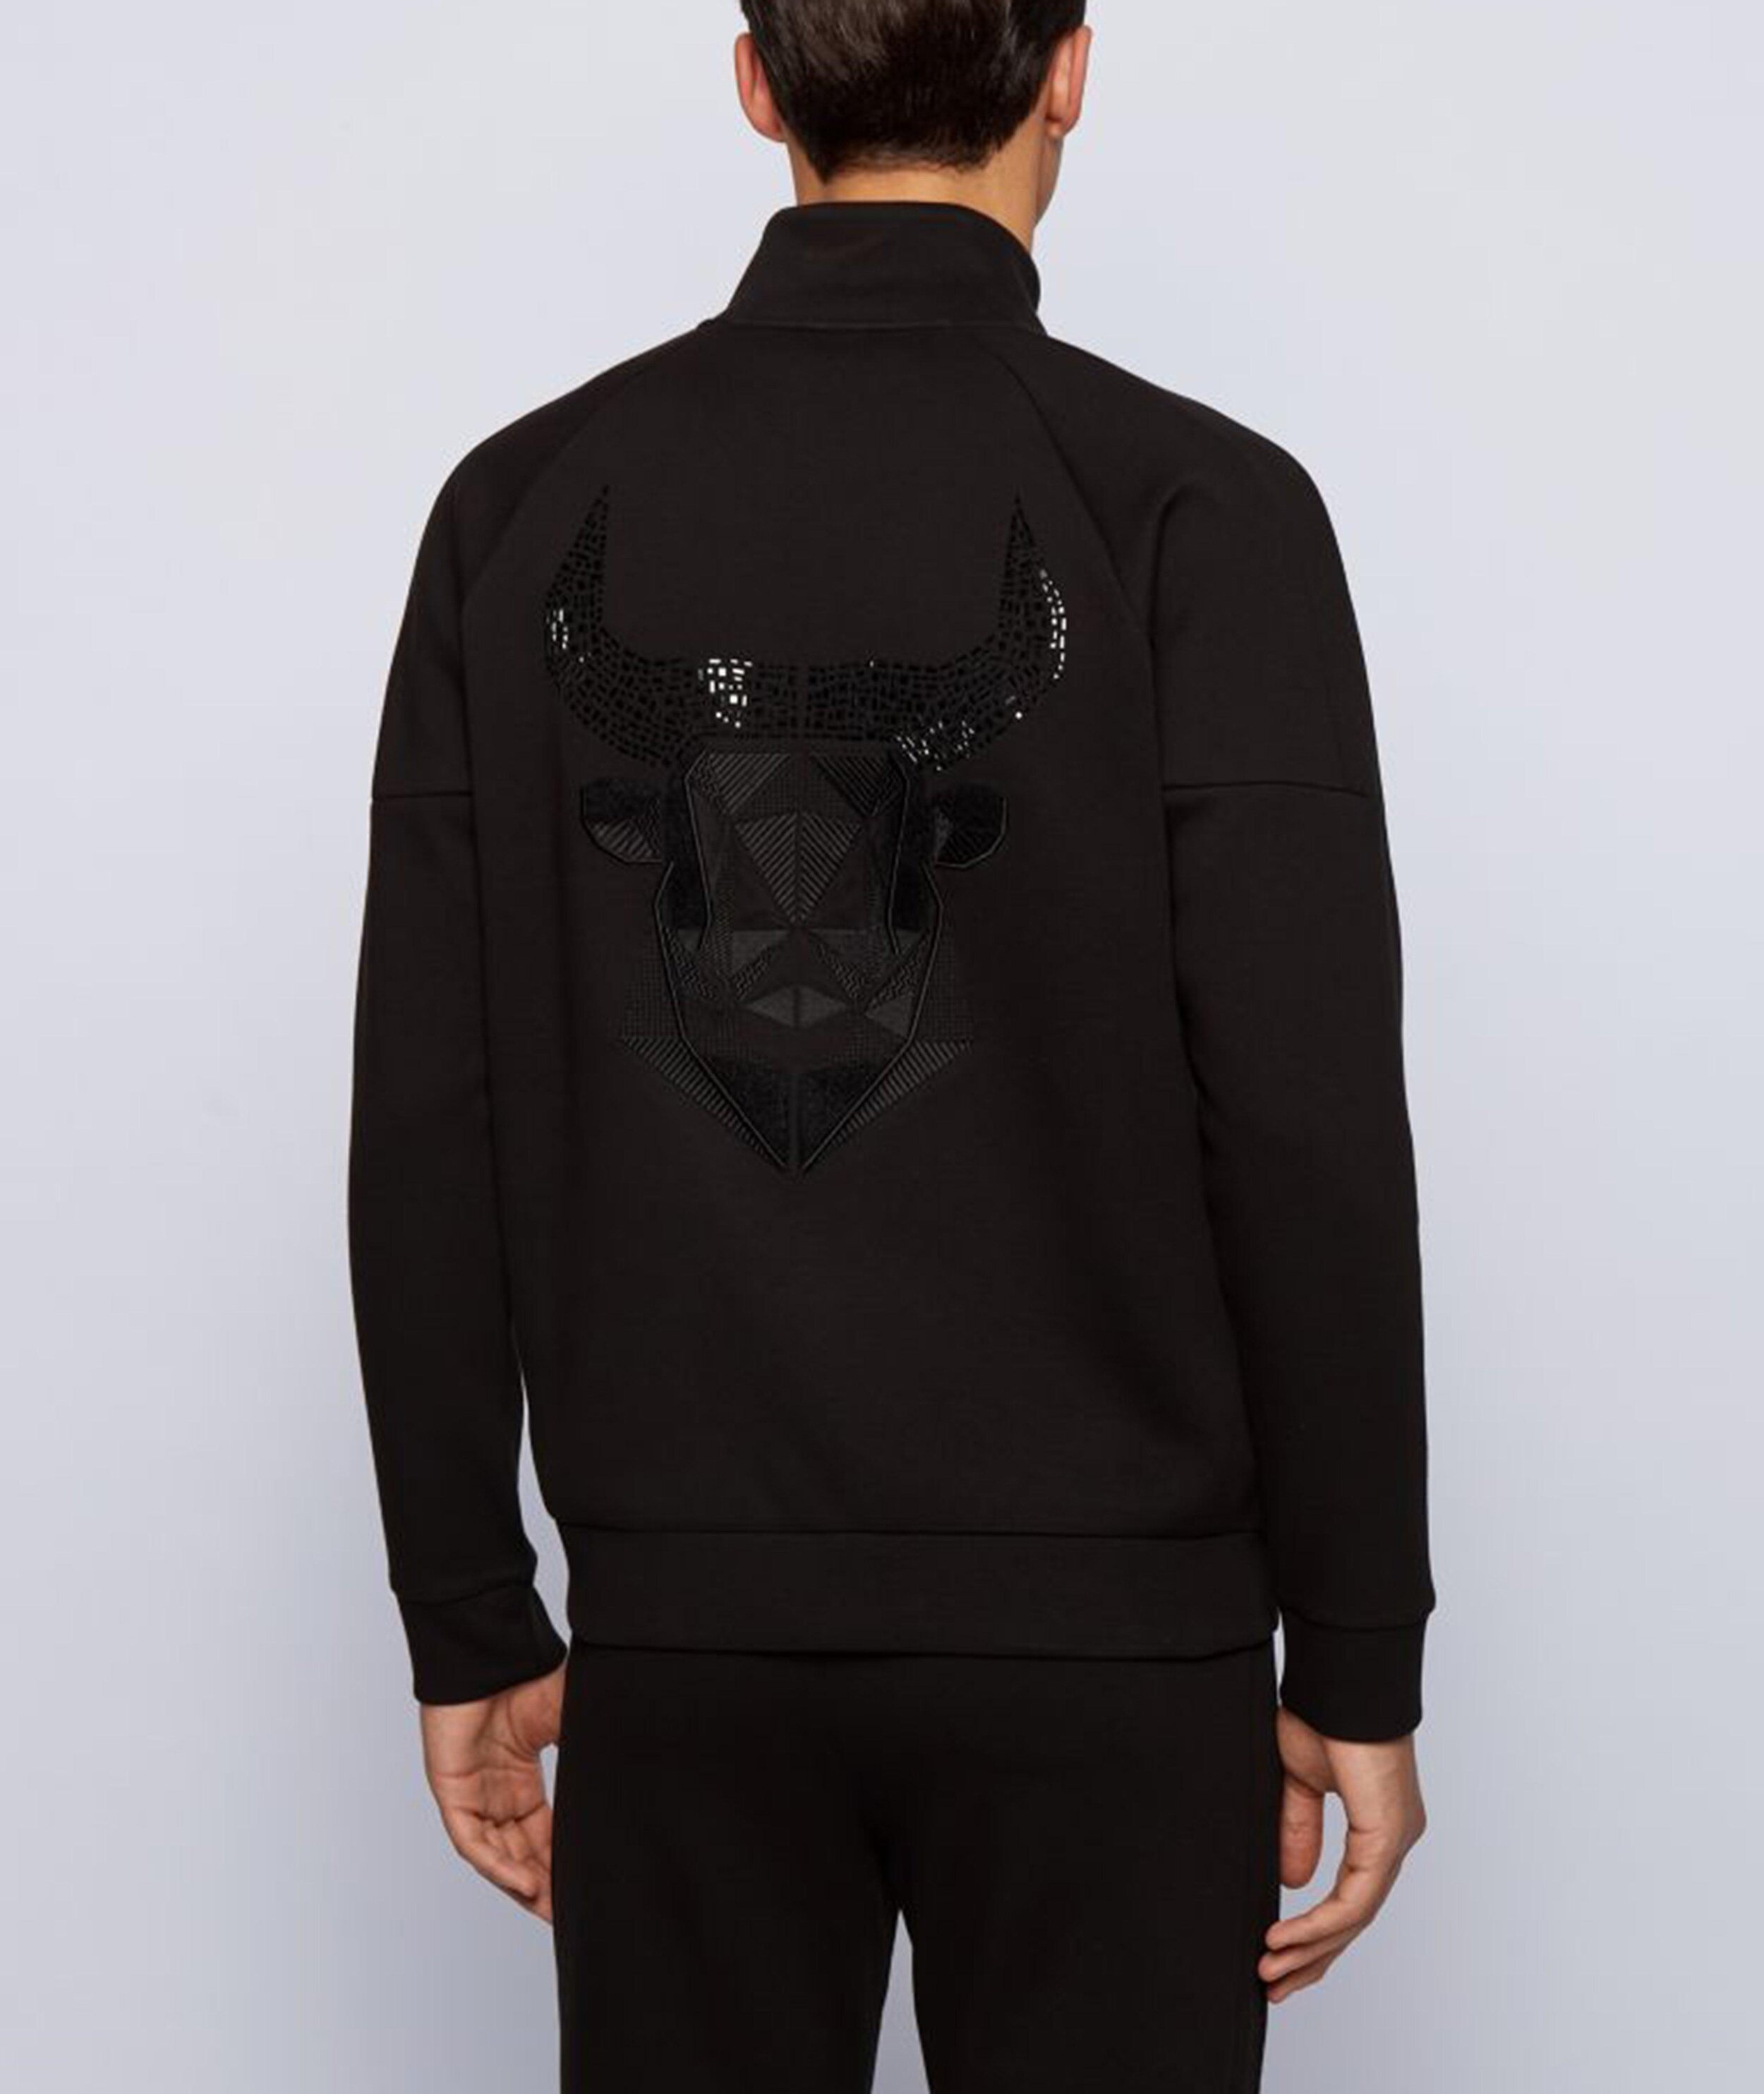 BOSS Year of the Ox Zip-Up Sweatshirt, $398